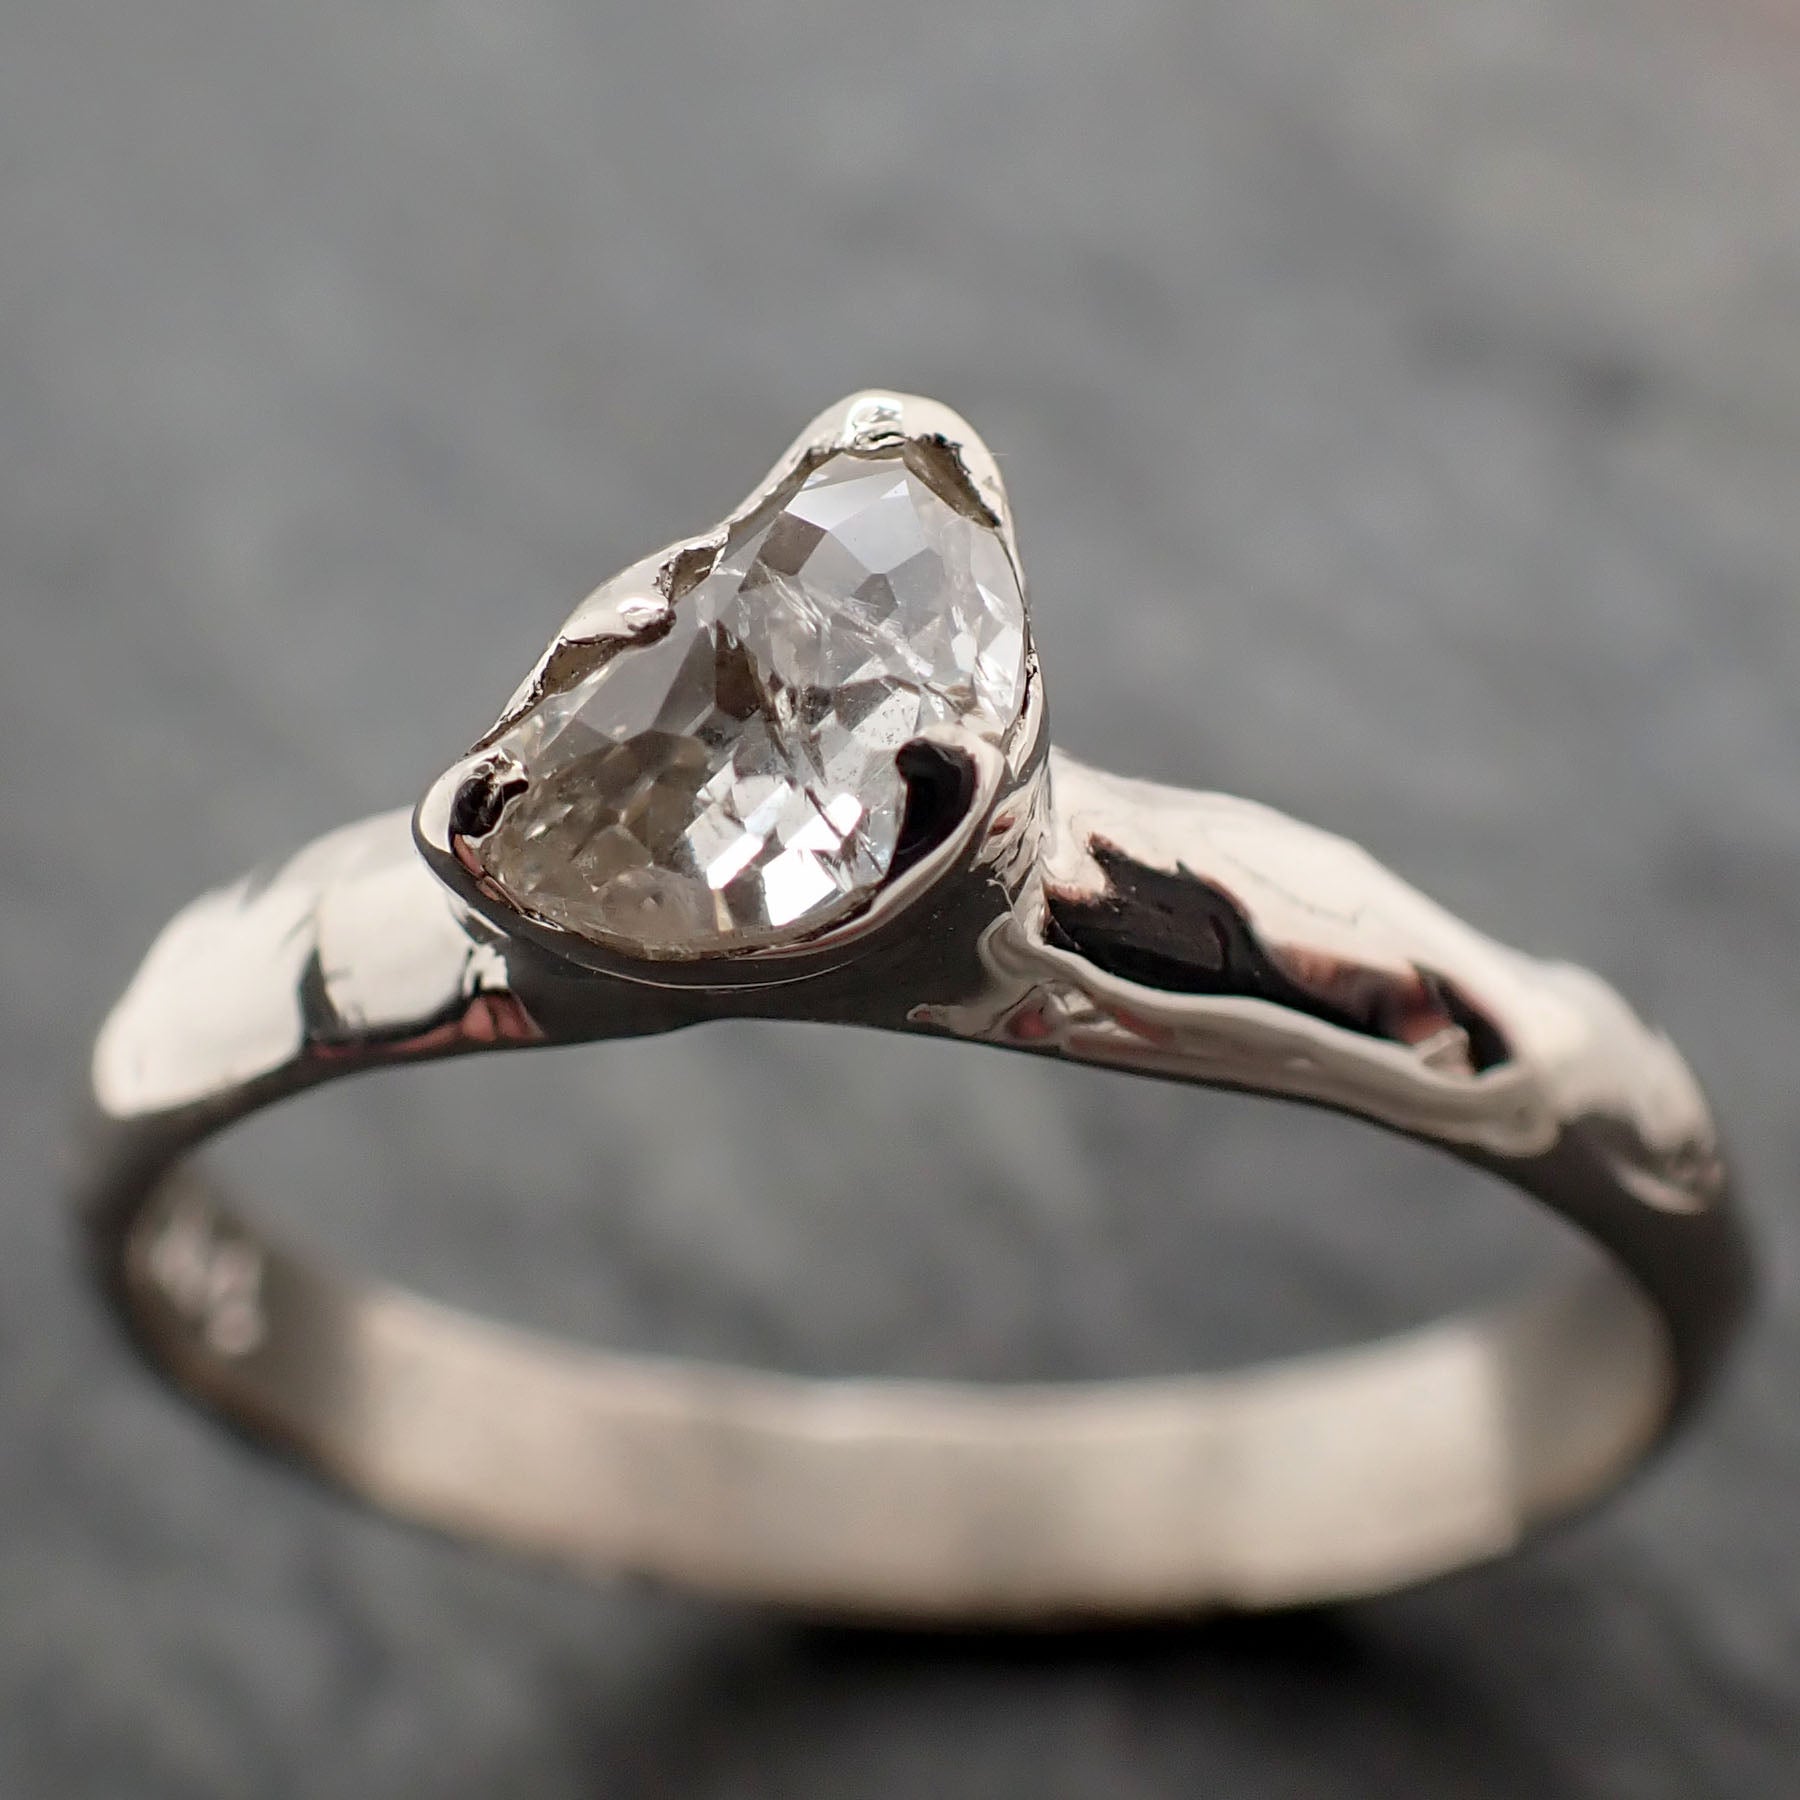 Fancy Cut Half Moon Diamond Solitaire Engagement 14k White Gold Wedding Ring byAngeline 2864